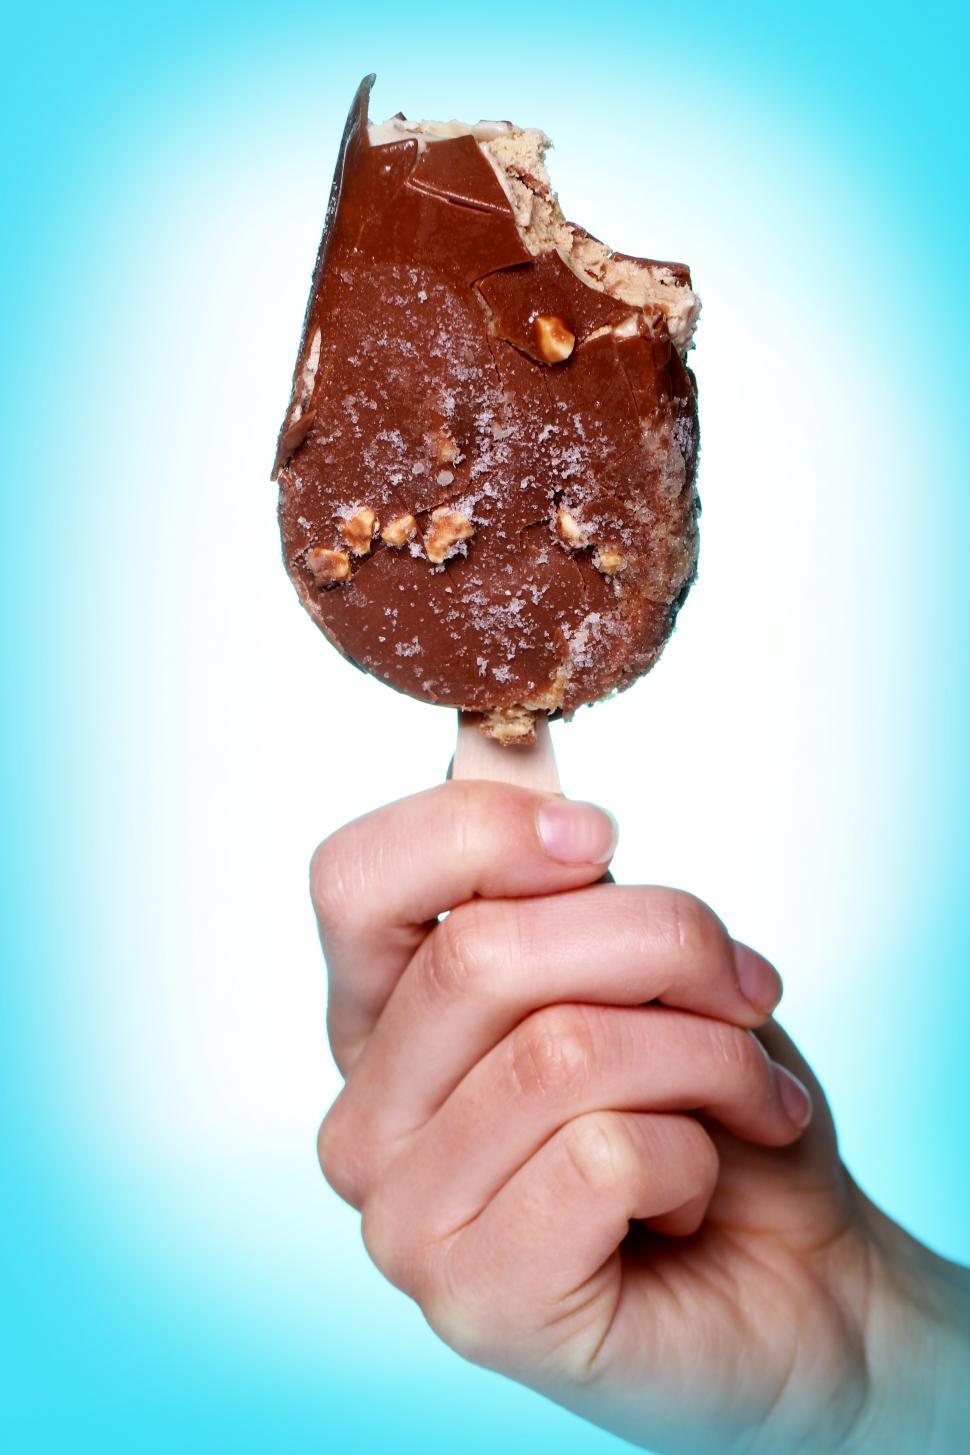 Free Image of Fresh chocolate ice cream bar with bites missing 